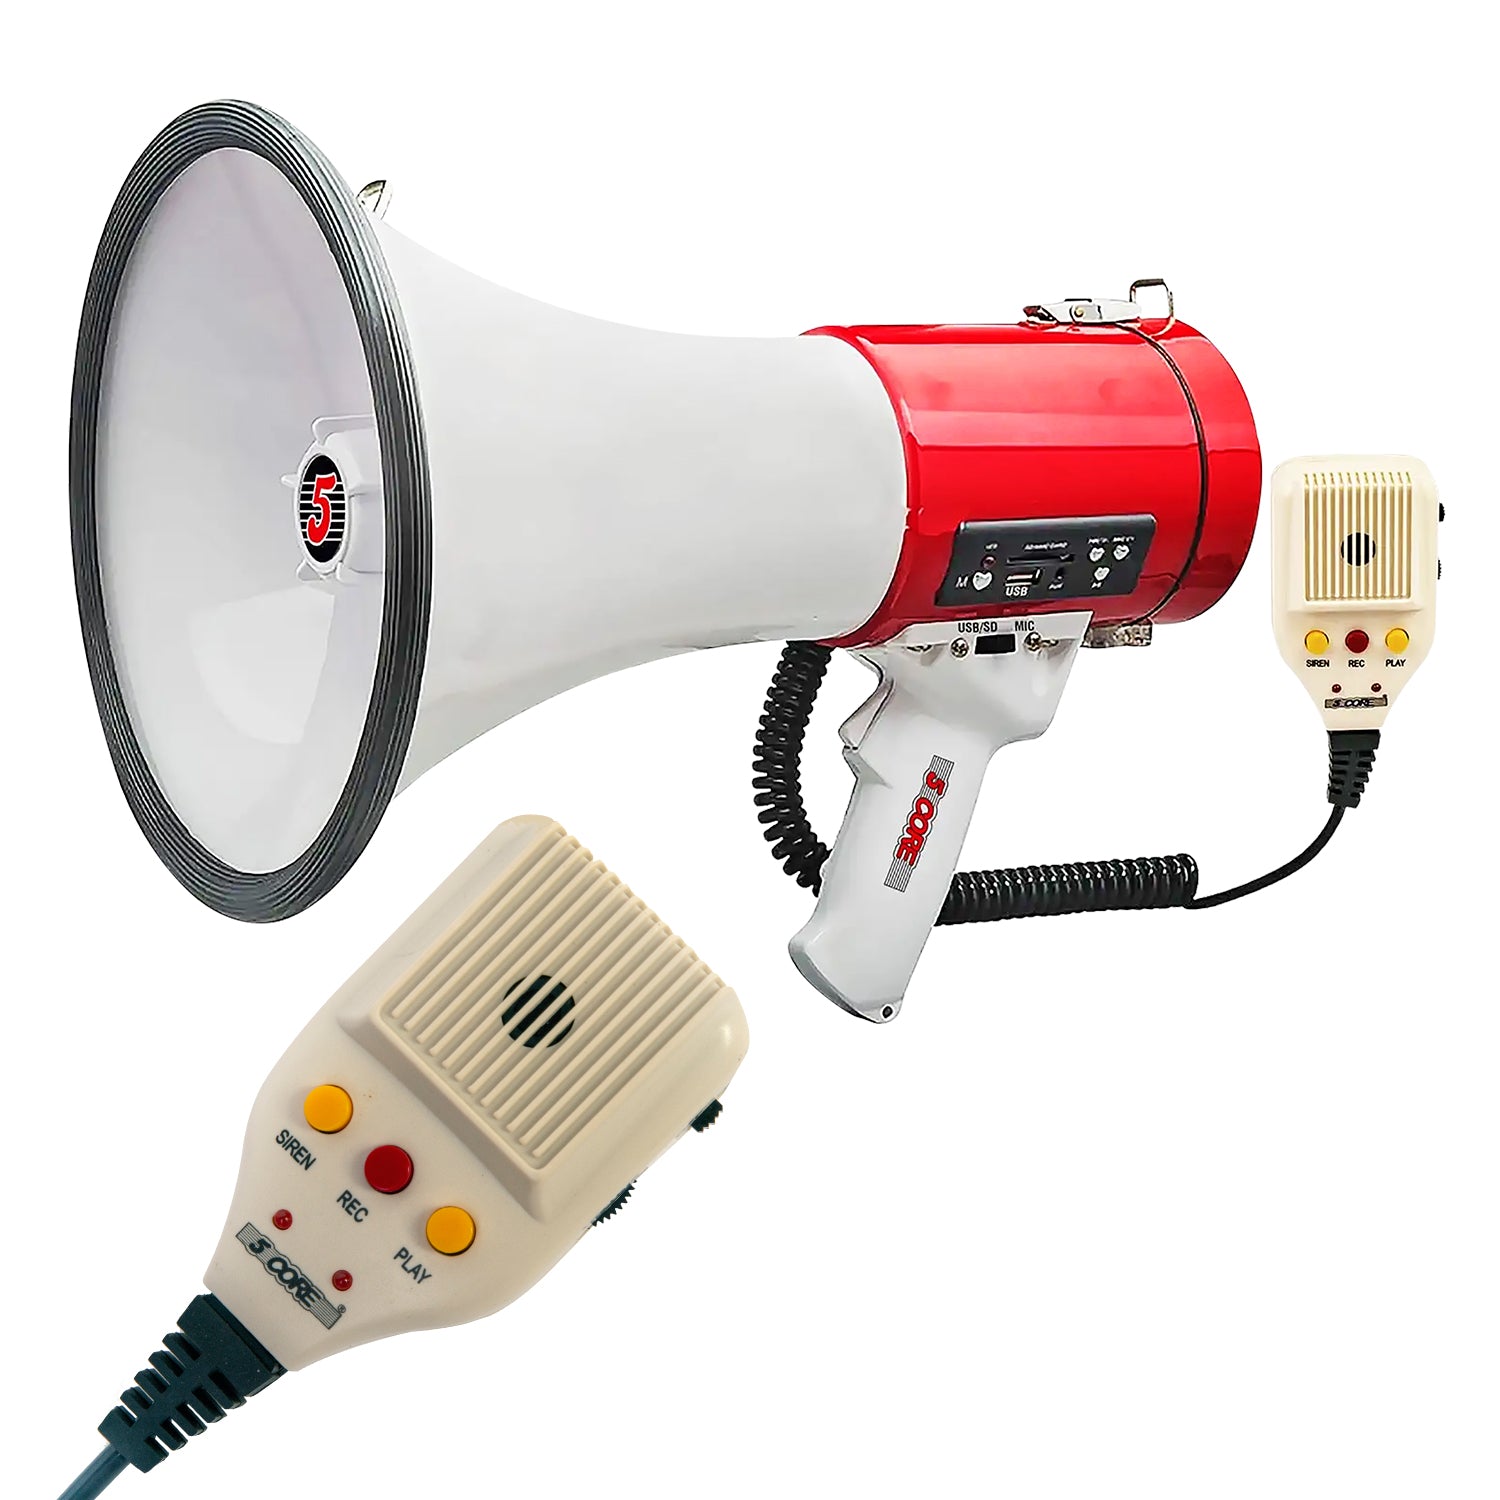 5 Core High Power Megaphone 50W Loud Siren Noise Maker Professional Bullhorn Speaker PA System w Recording USB SD Card Adjustable Volume -66SF